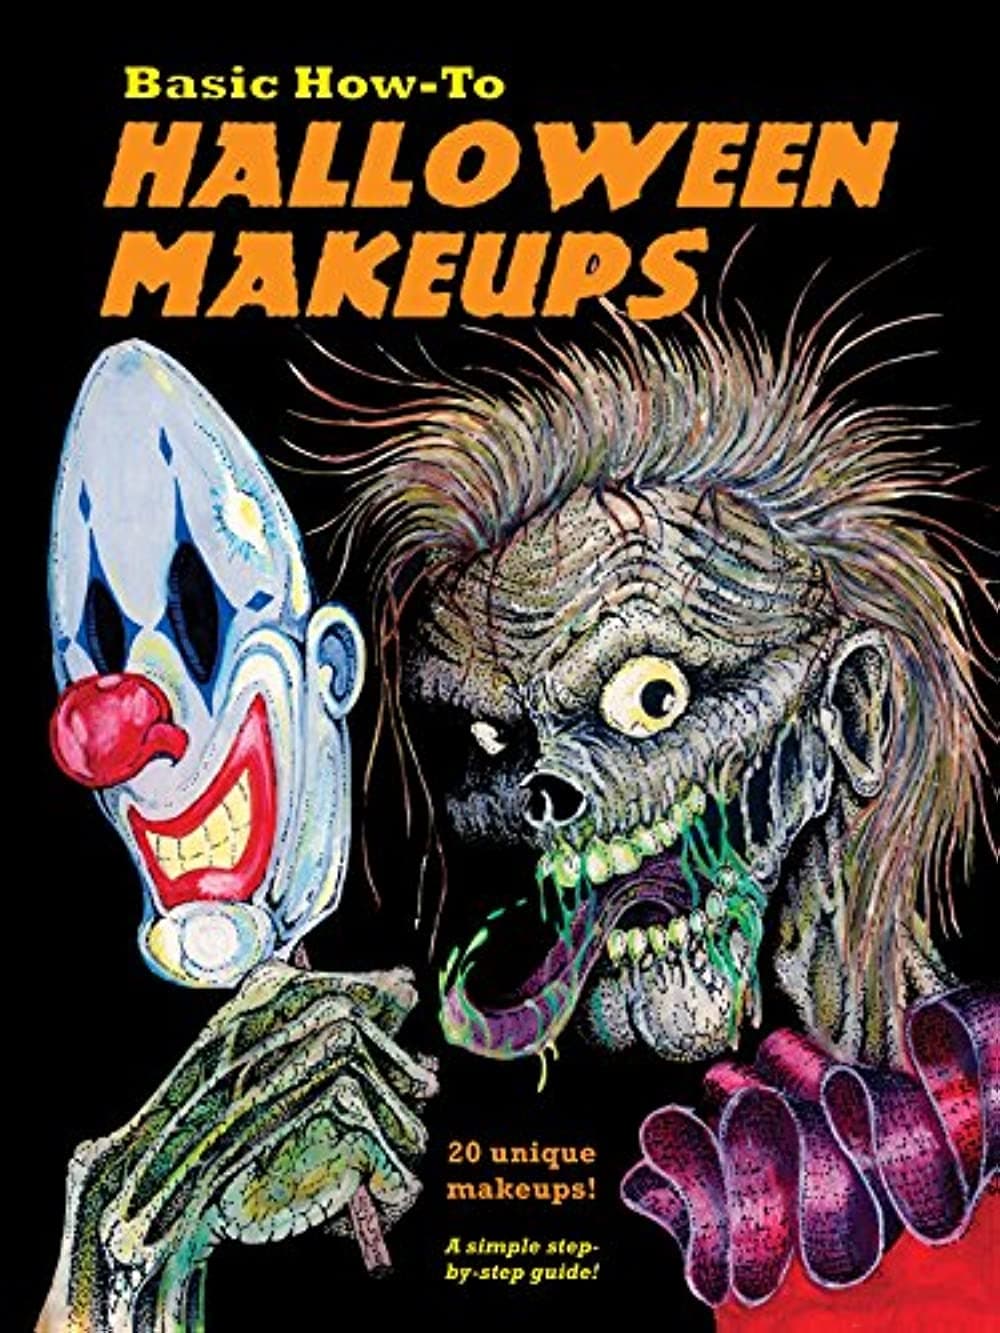 Basic How-To Halloween Makeups on FREECABLE TV